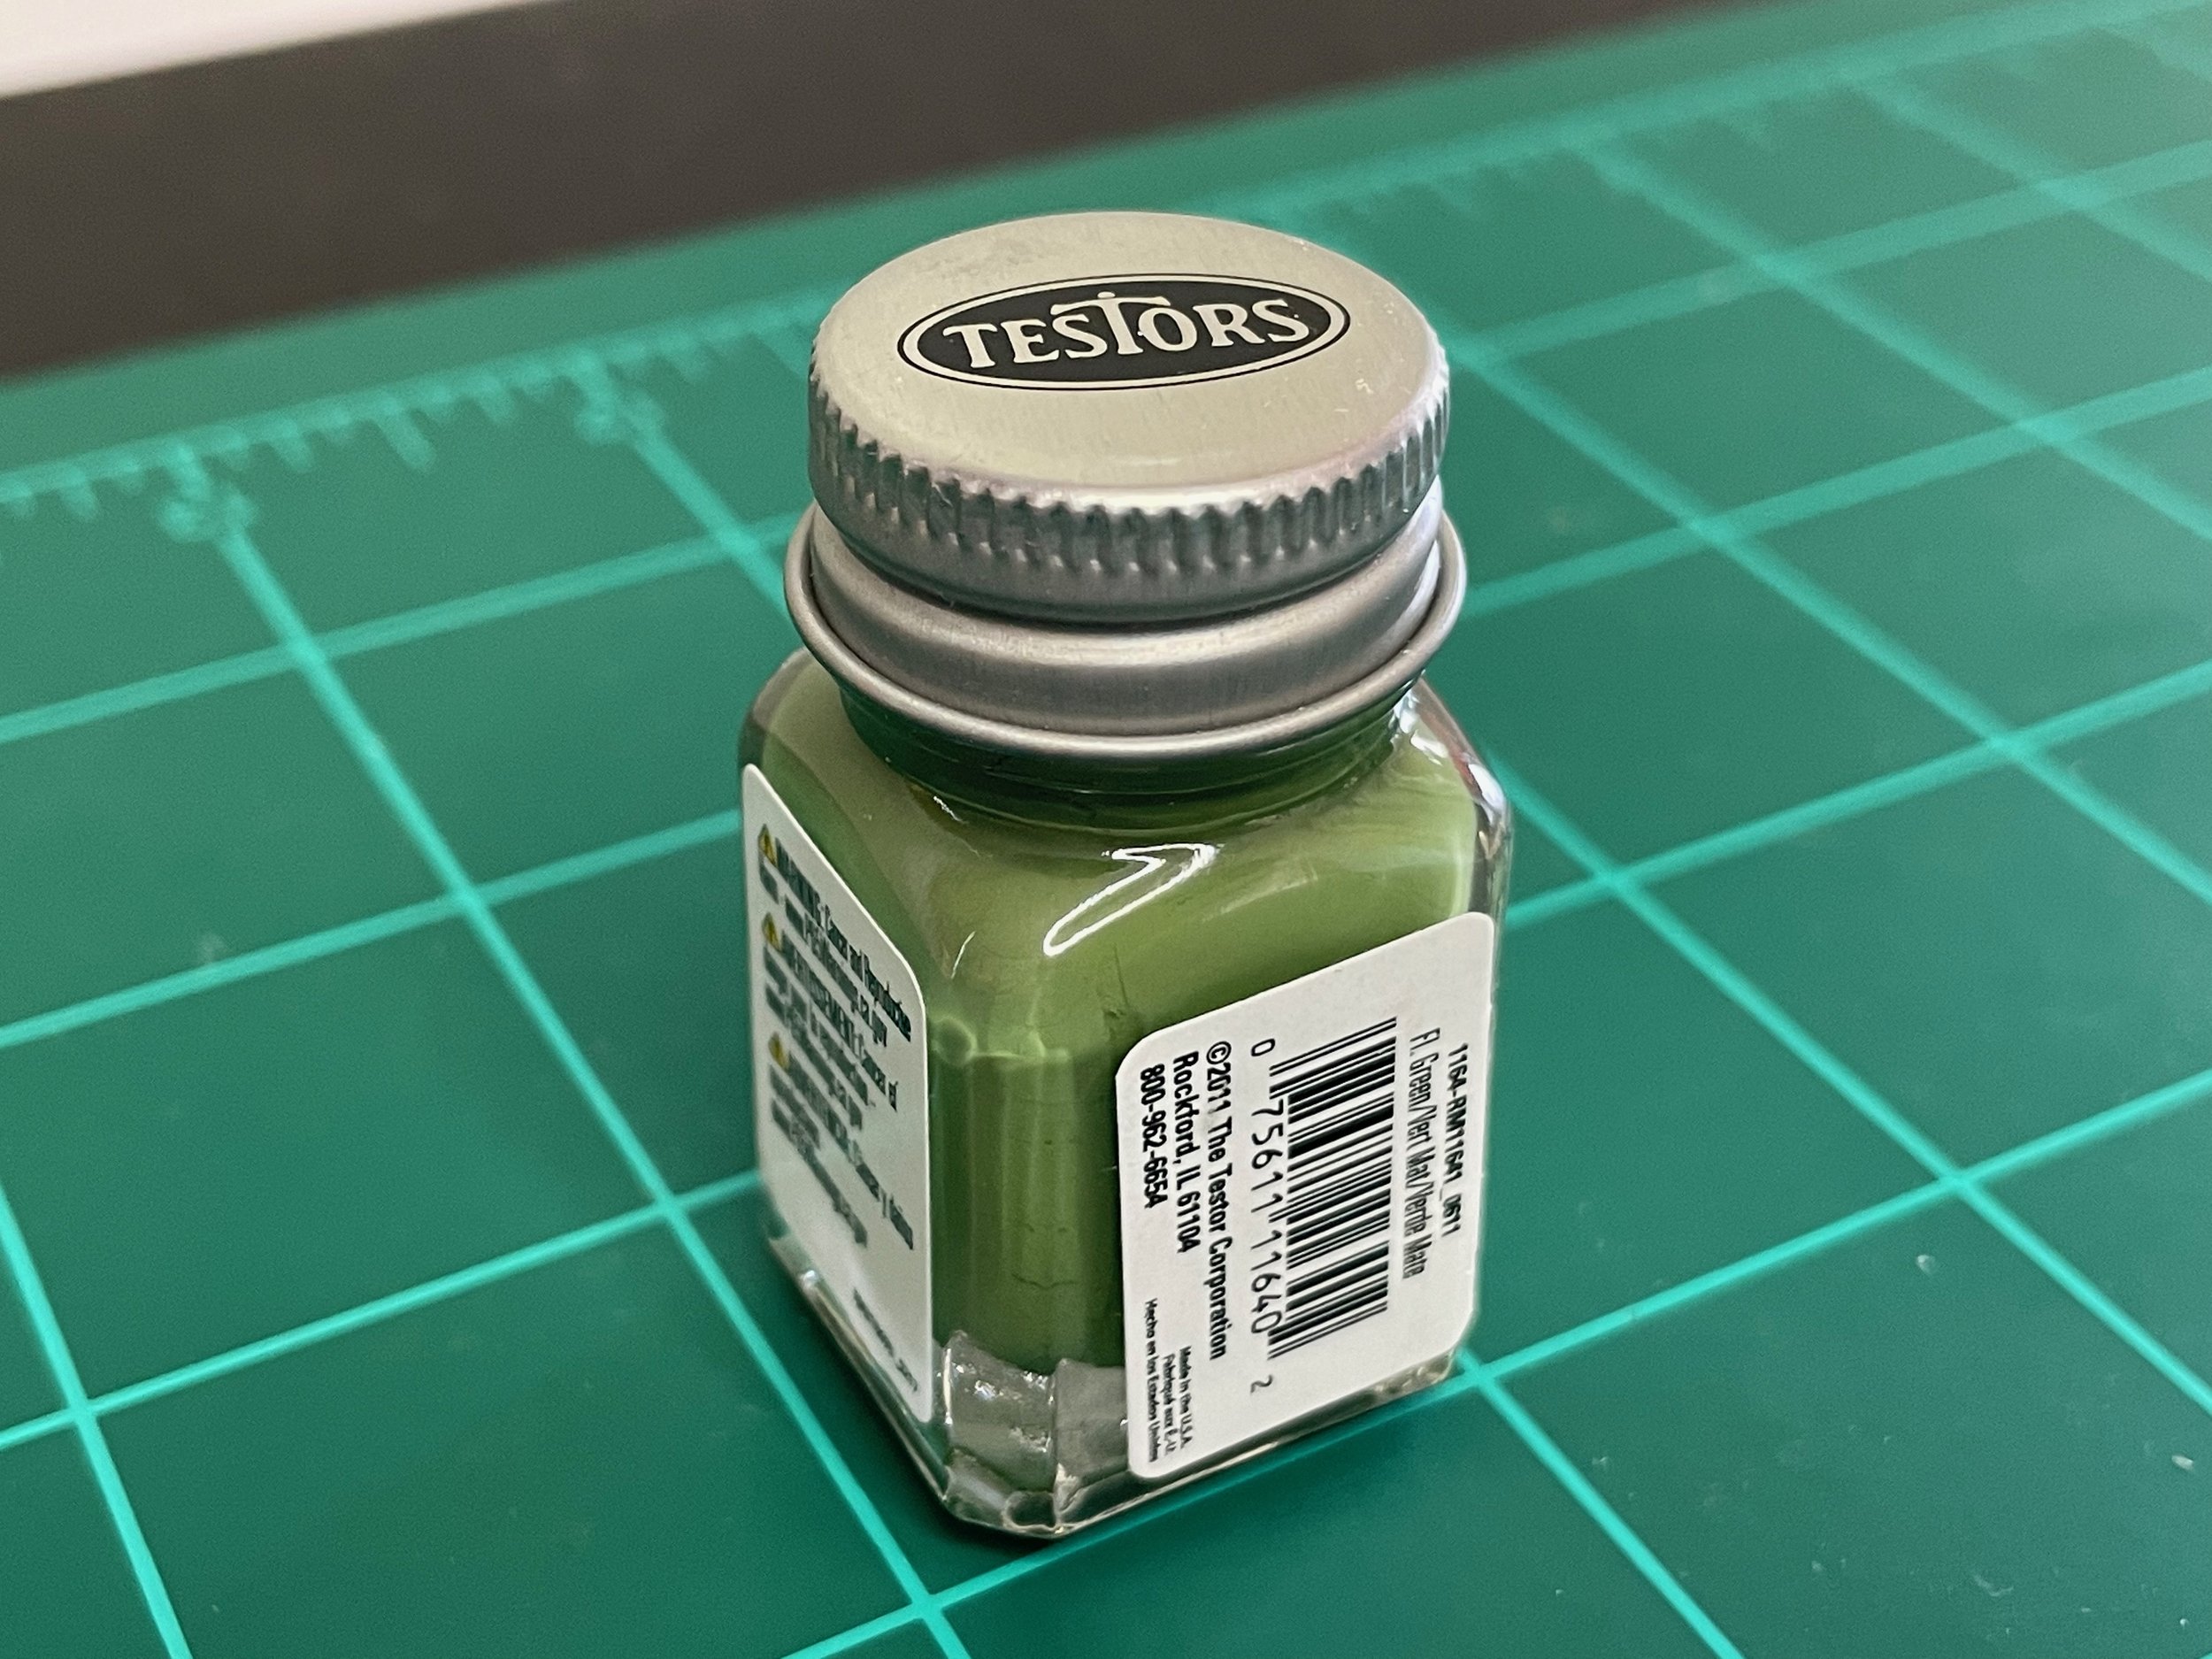 Testors Enamel Paint - Flat - Beret Green 1/4 oz.